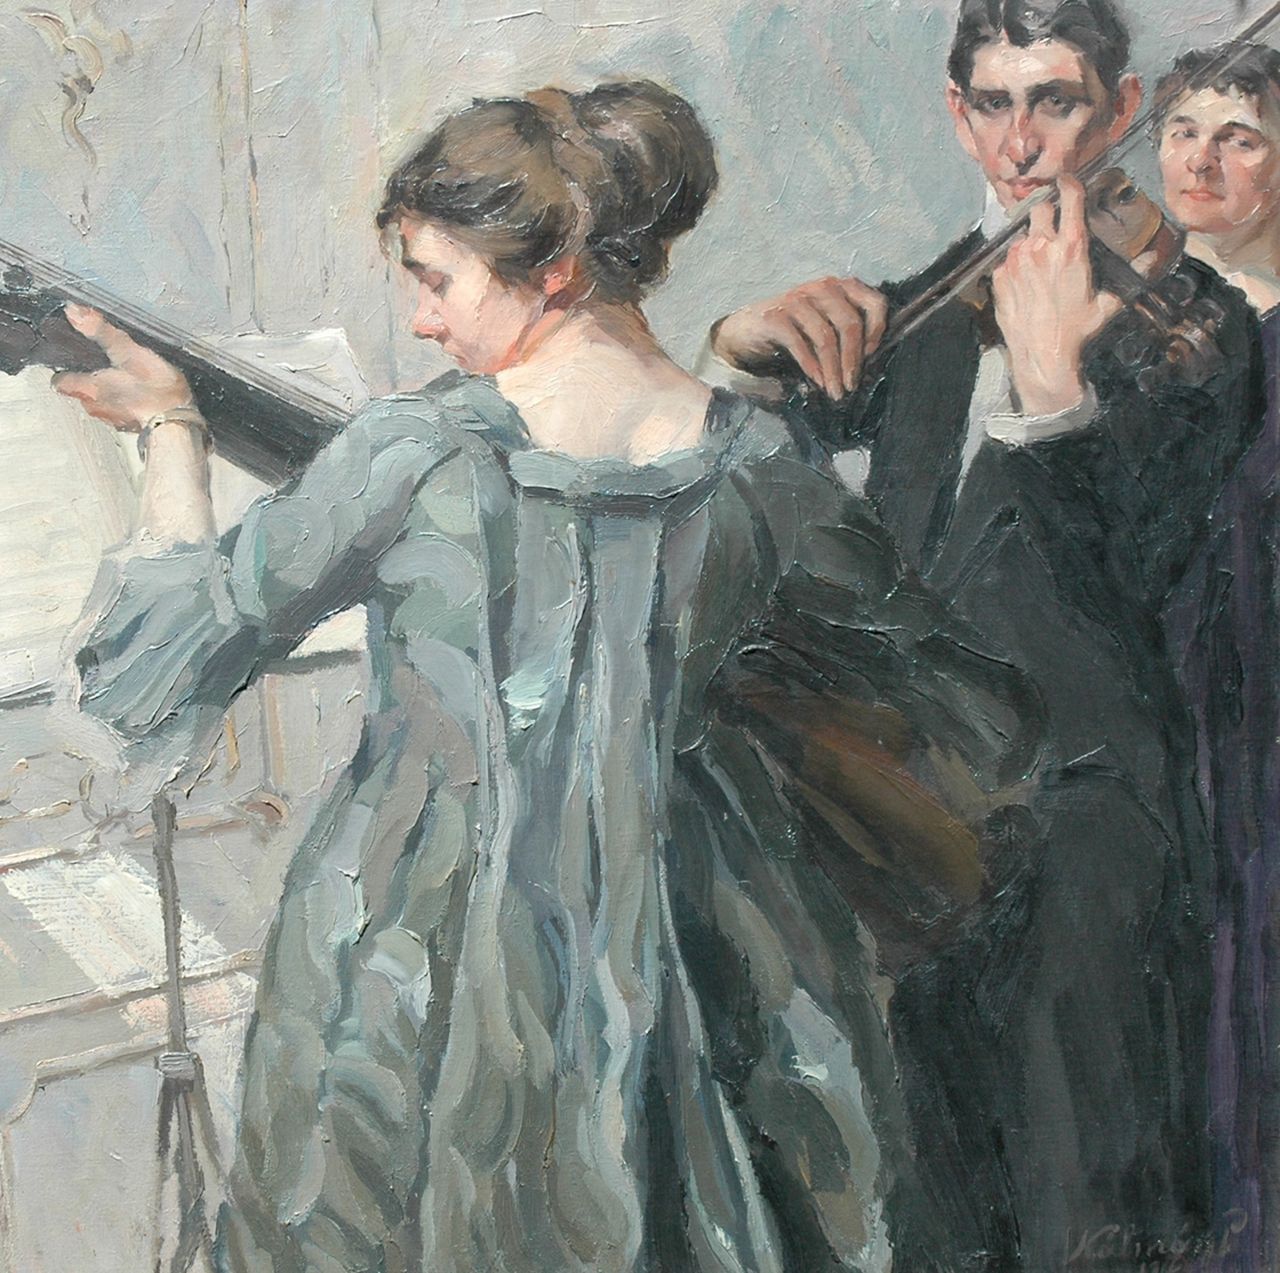 Kálmán P.  | Péter Kálmán, Het duet, olieverf op doek 98,6 x 98,9 cm, gesigneerd rechtsonder en gedateerd 1912